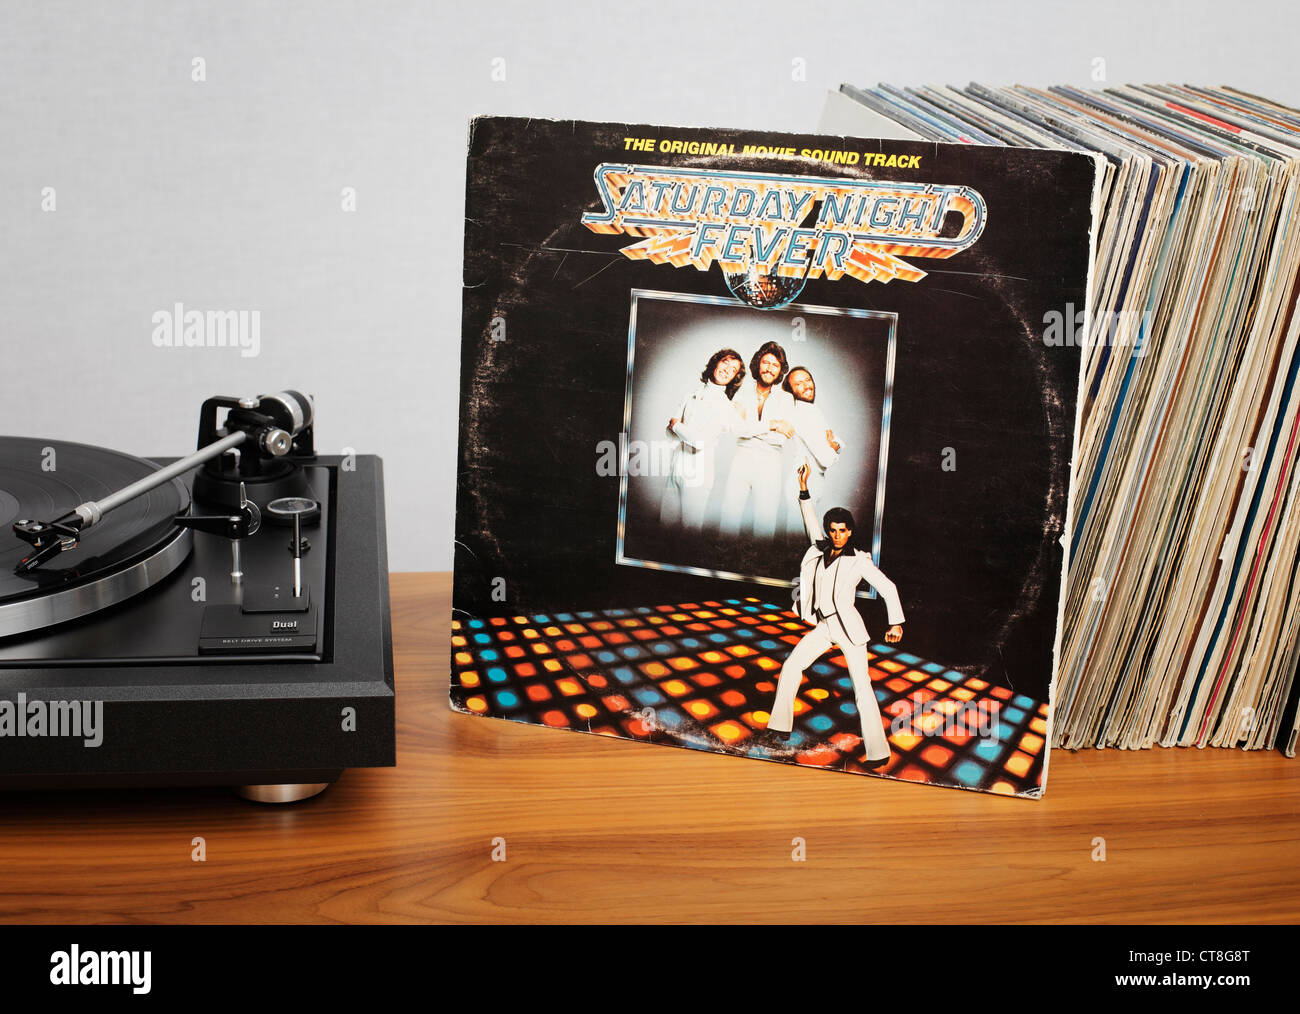 Saturday Night Fever: The Original Movie Sound Track. Stock Photo